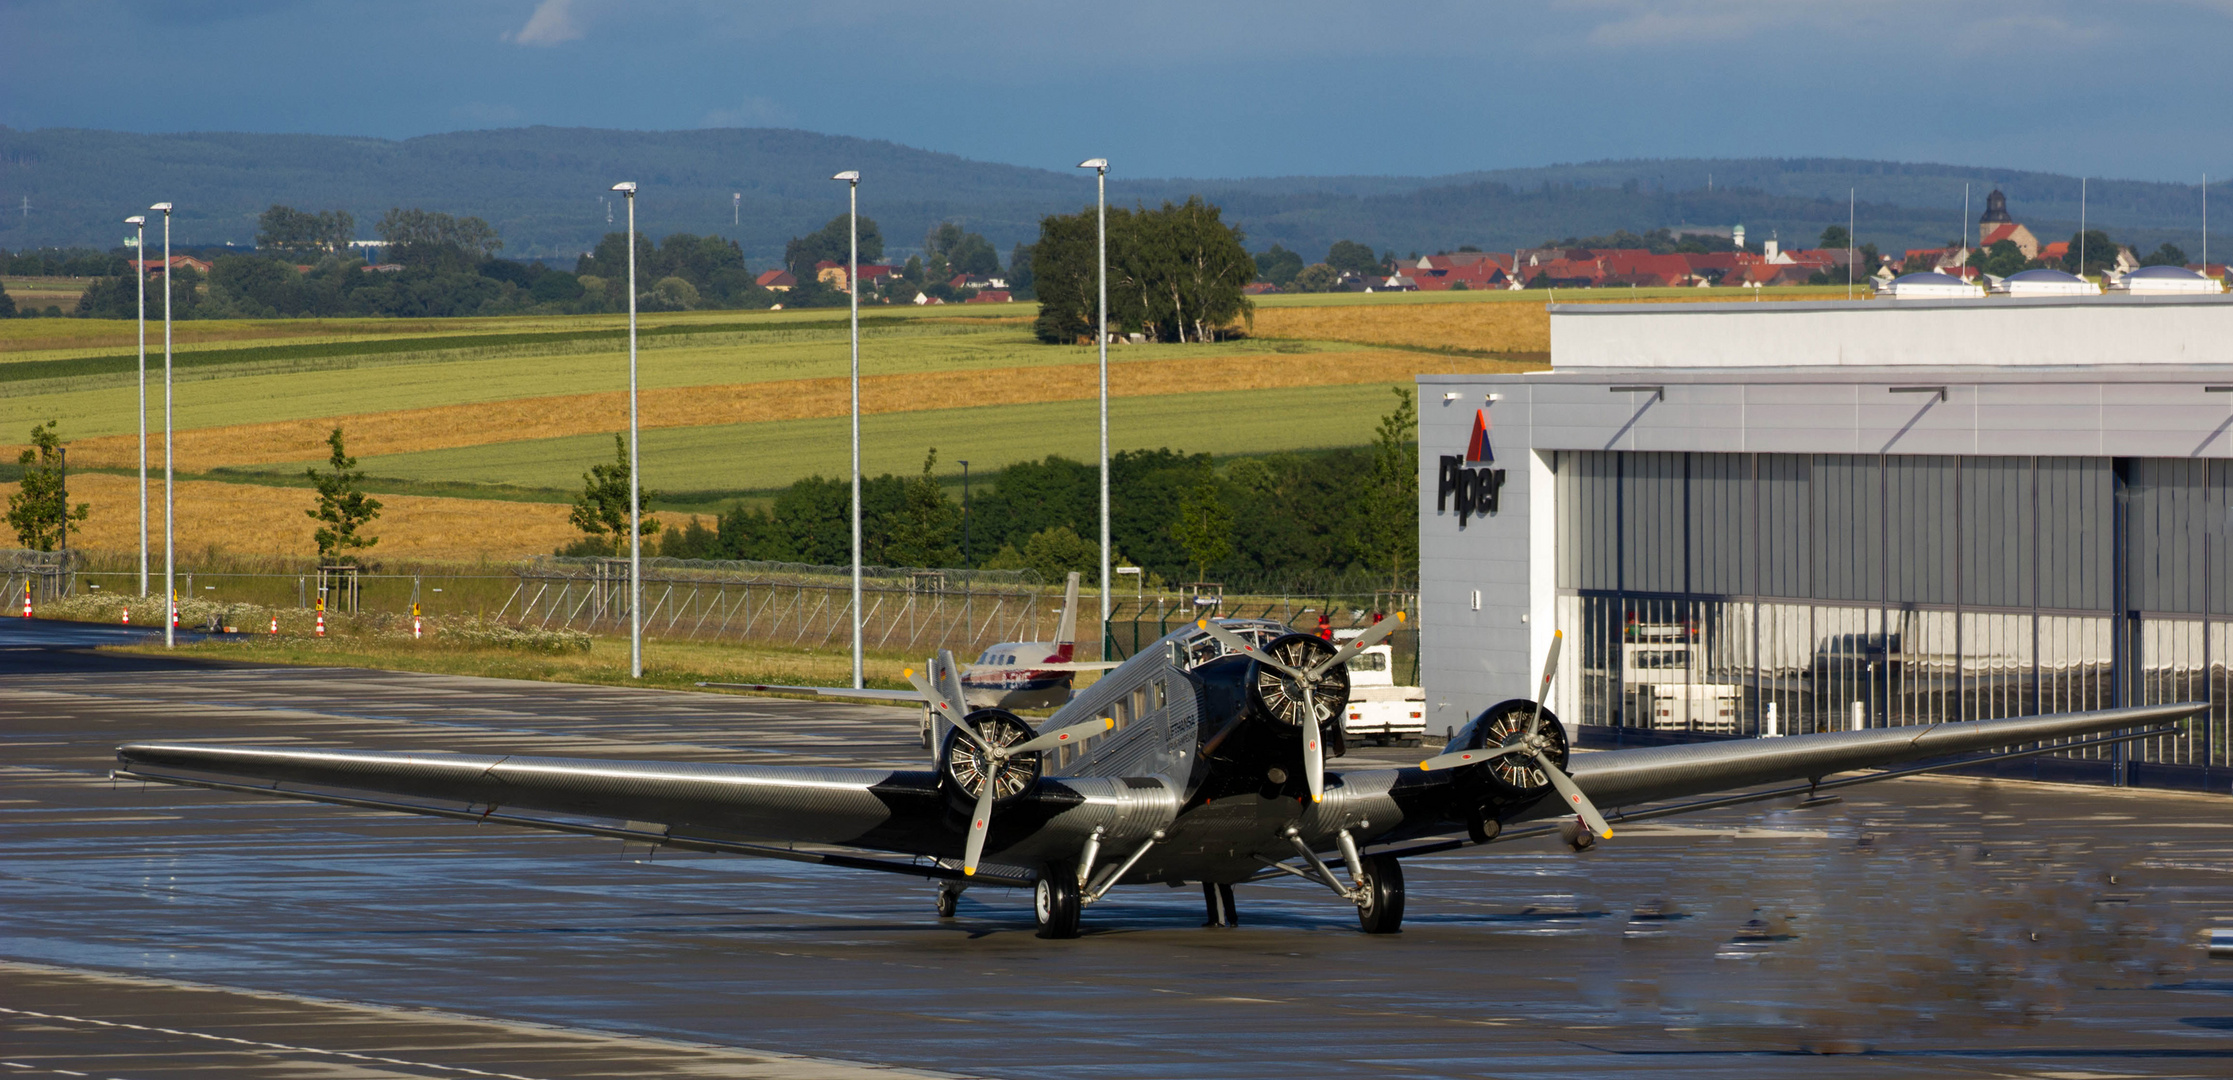 Ju 52 auf Park Position in Kassel Calden